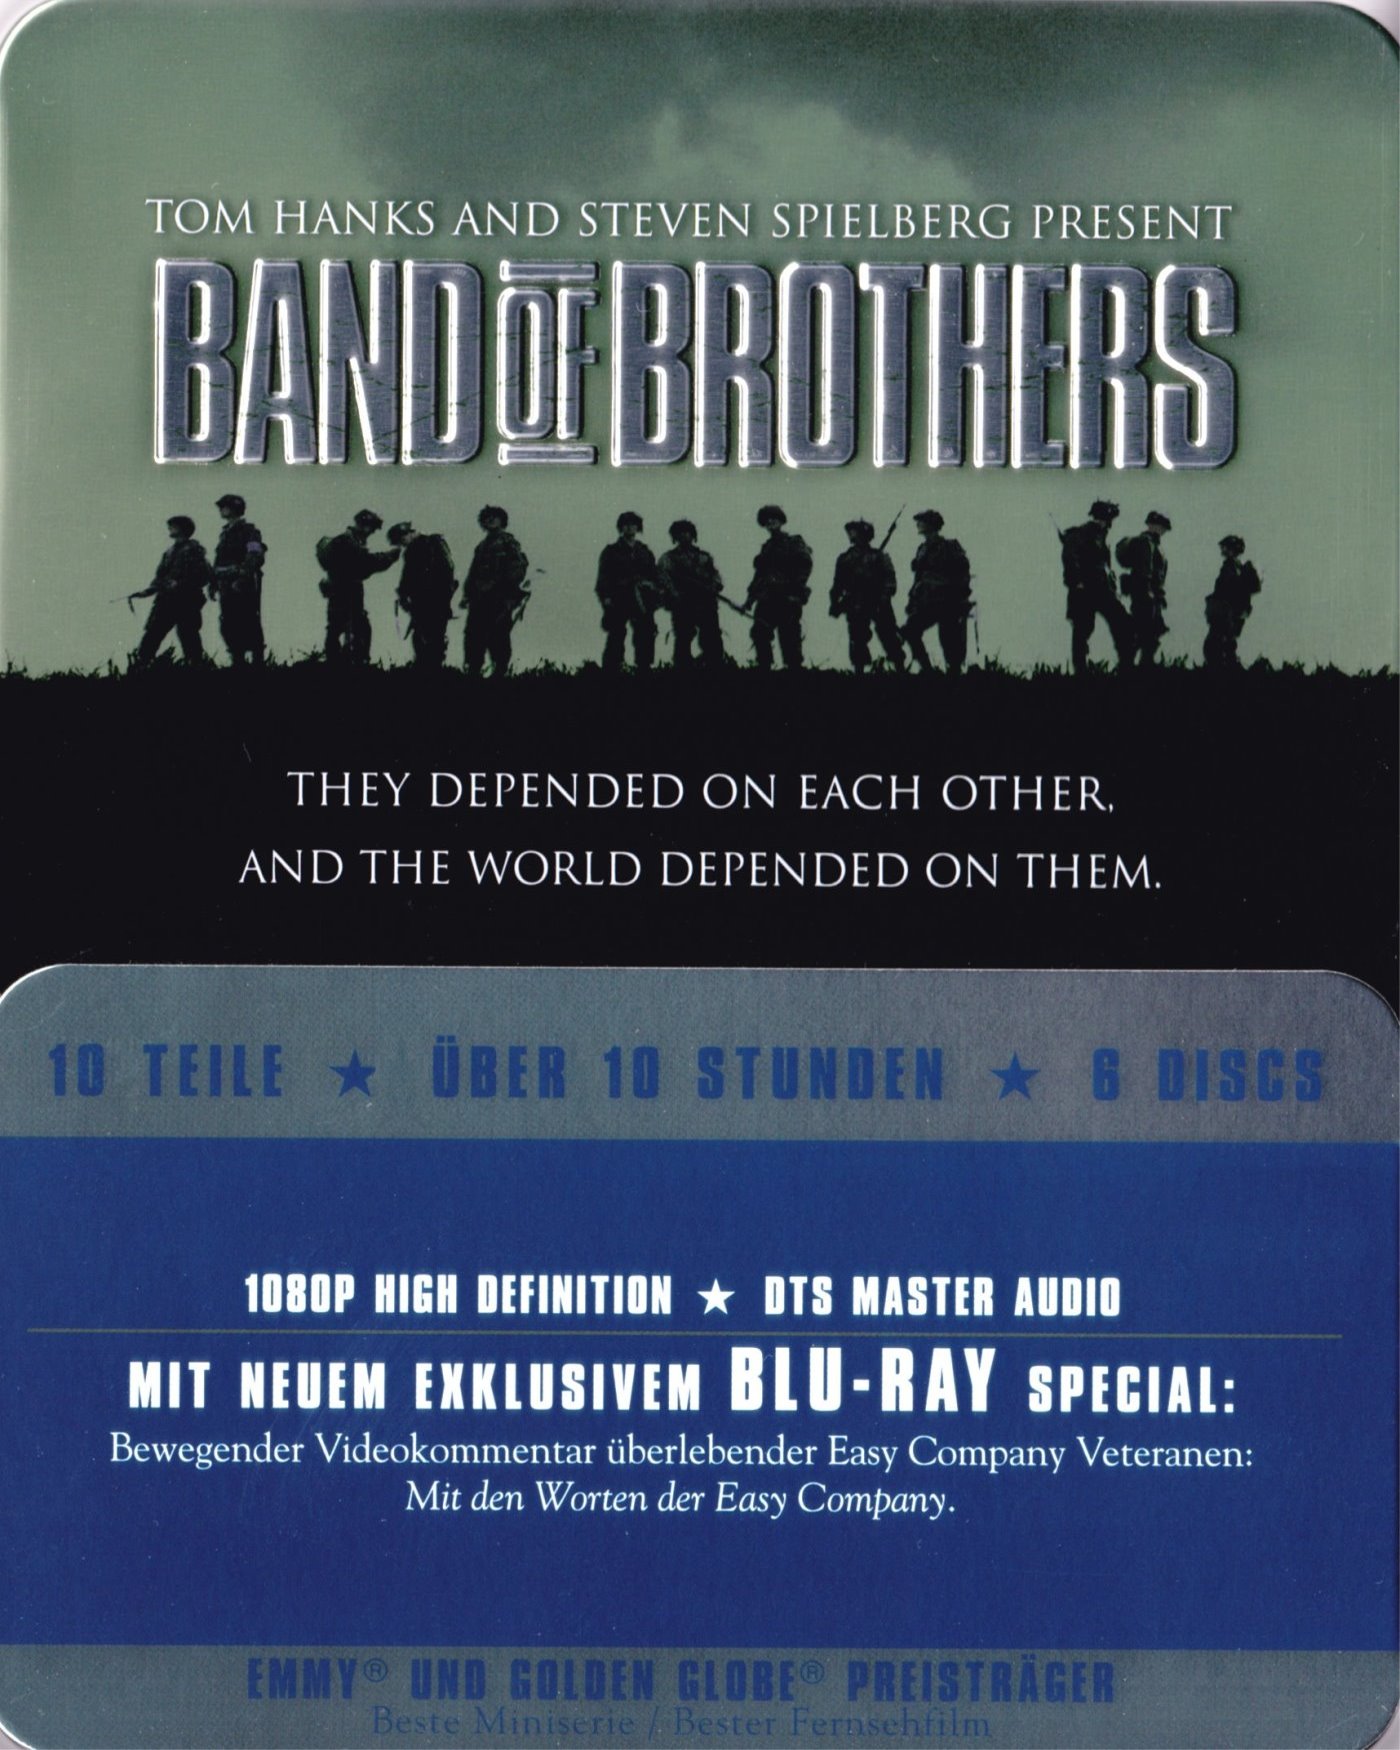 Cover - Band of Brothers - Wir waren wie Brüder.jpg